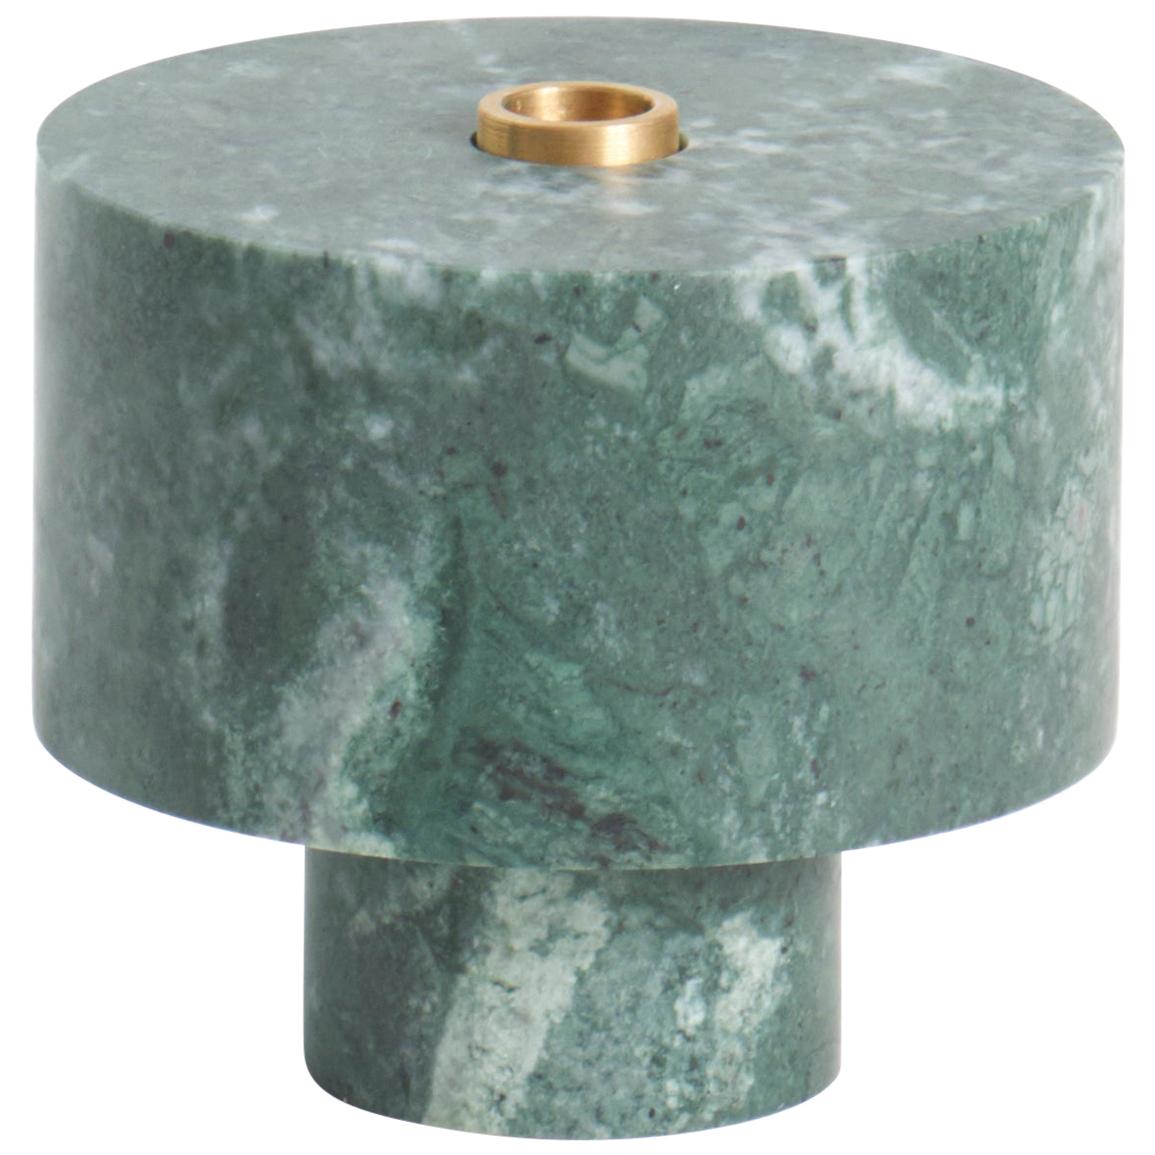 New Modern candleholder in Green Marble, Creator Karen Chekerdjian Stock